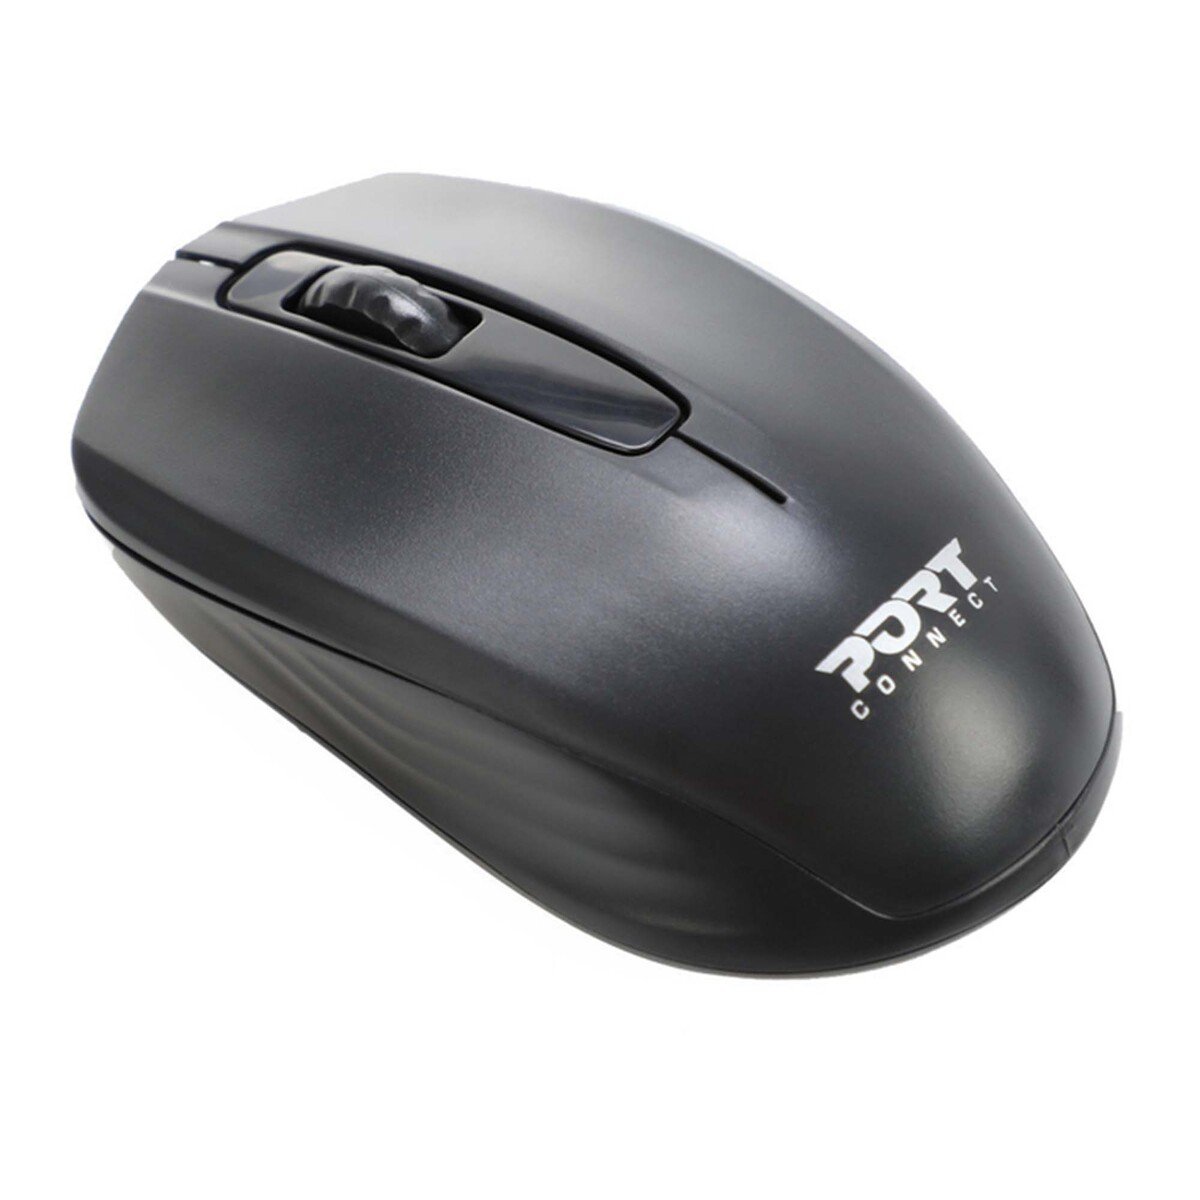 Port Design Wireless Mouse 900508 Black